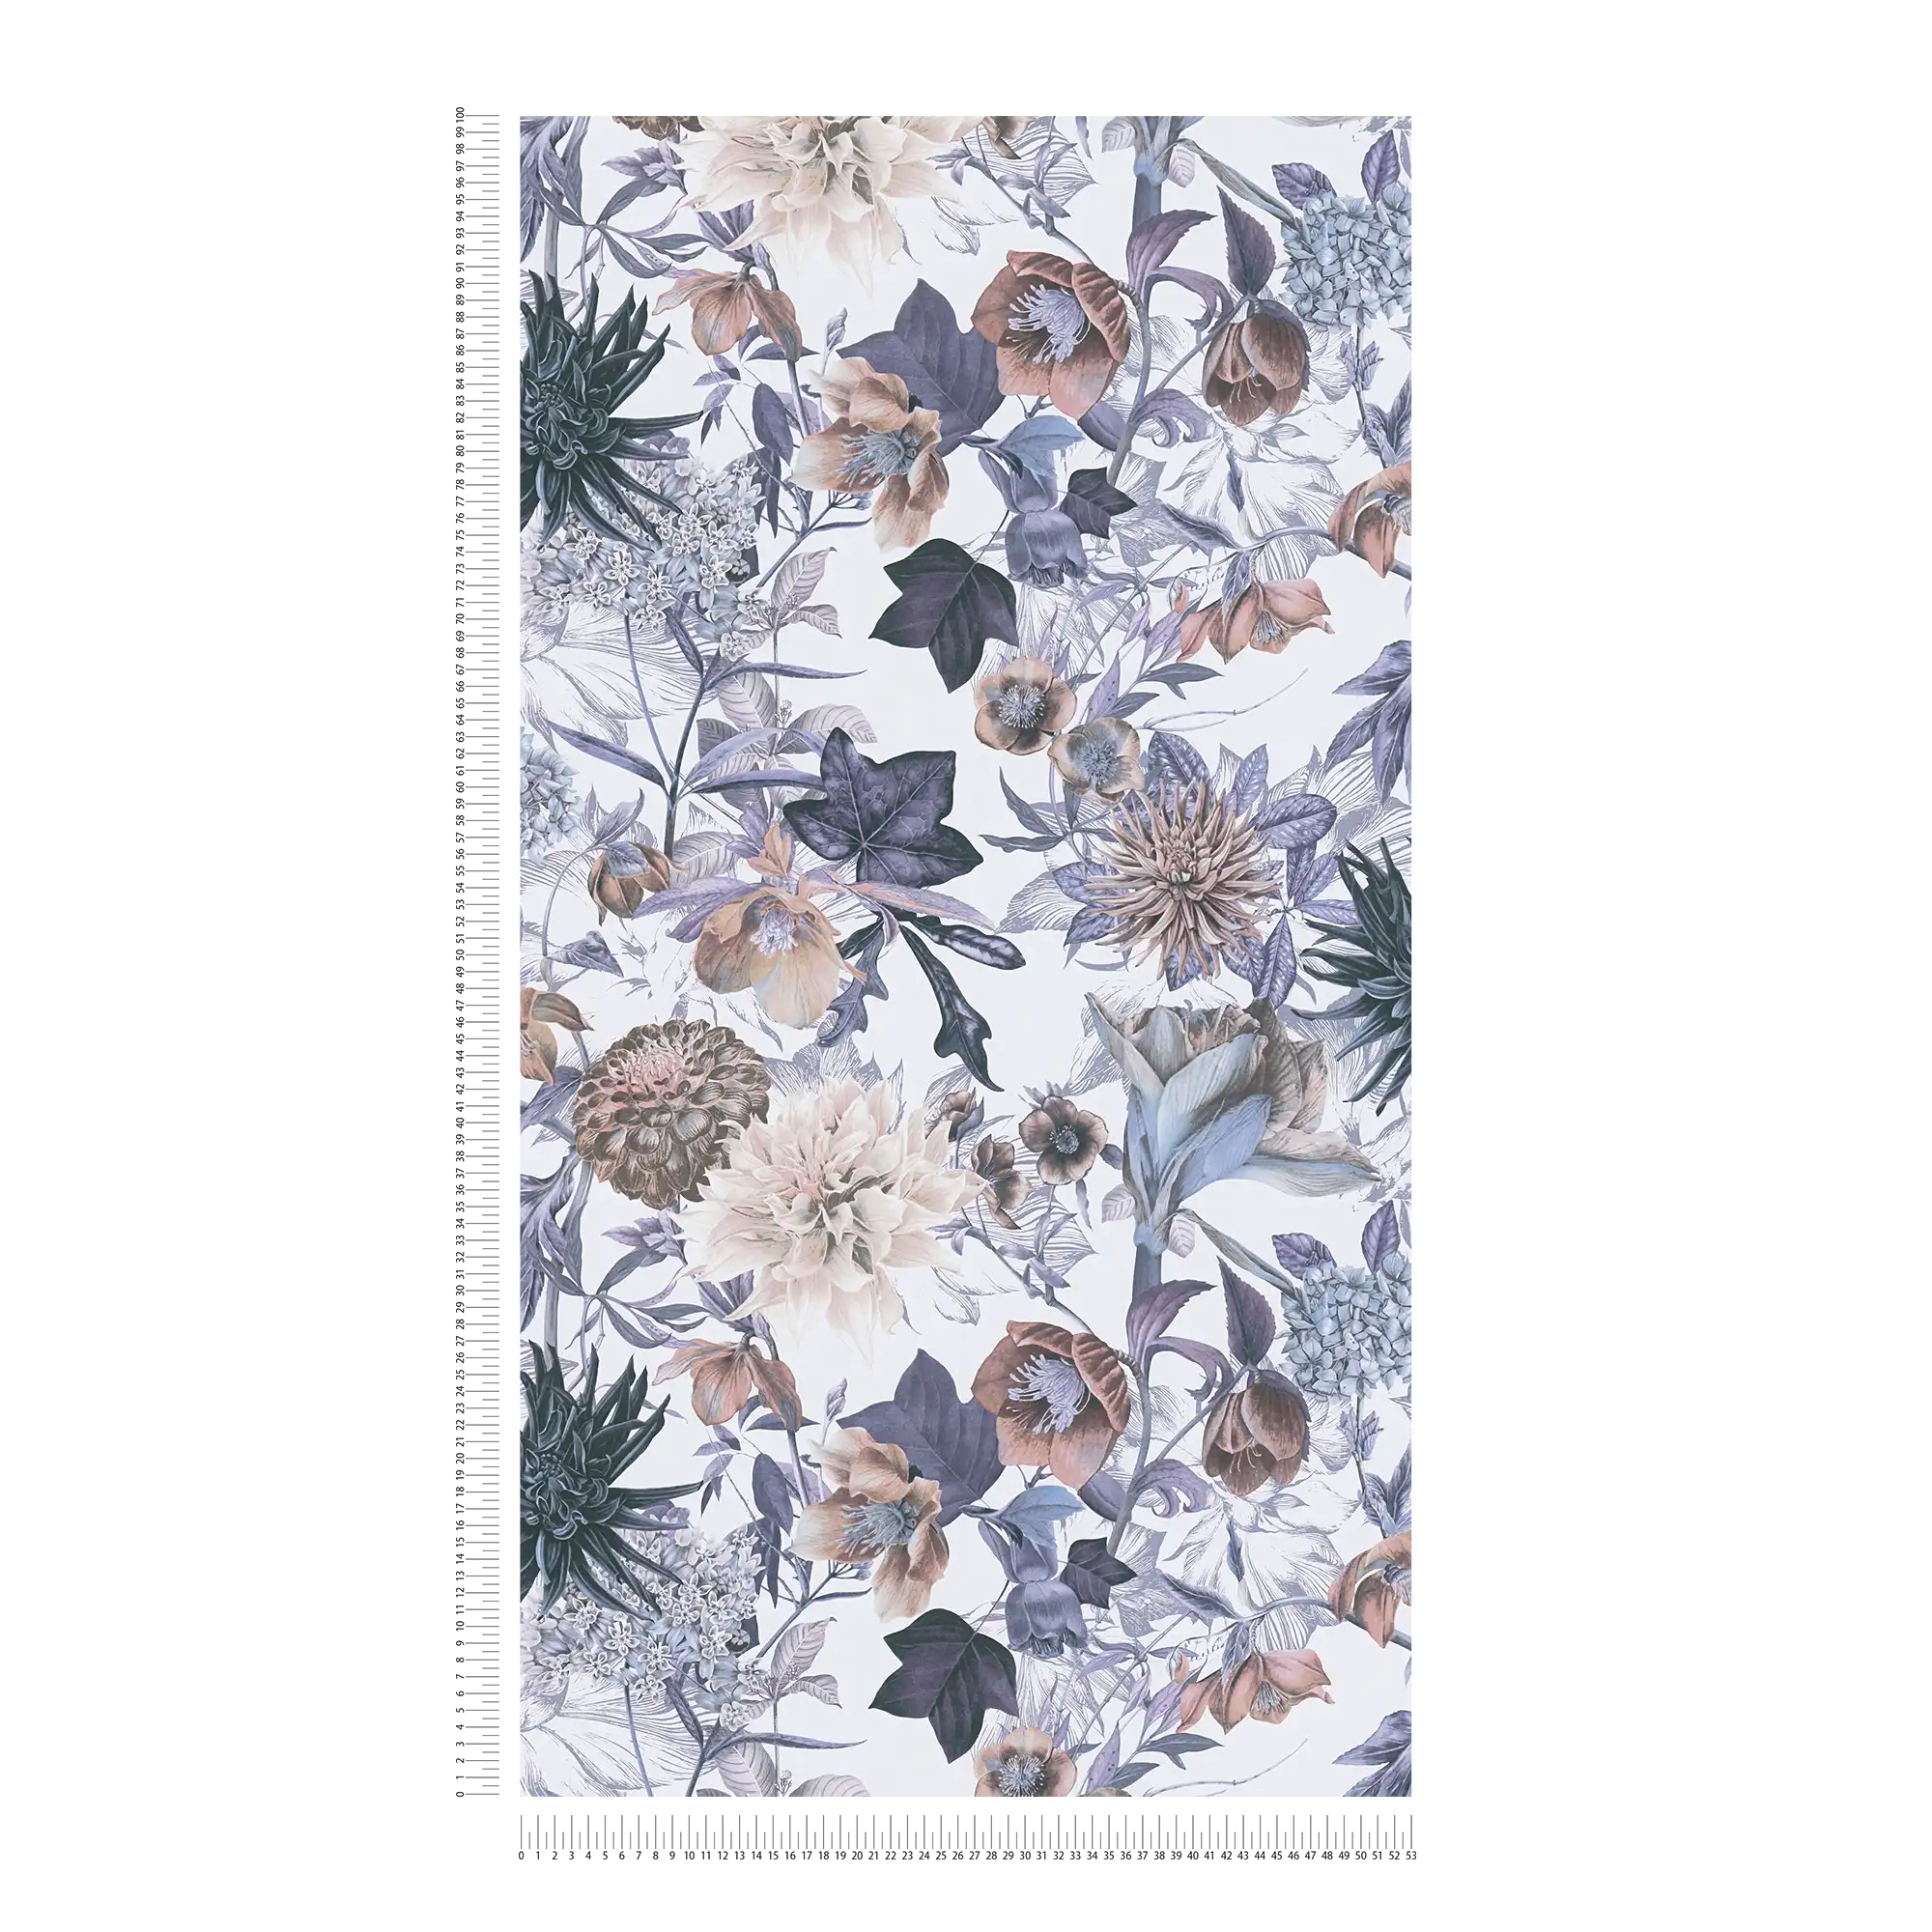             Papel pintado con motivos florales - azul, marrón, gris
        